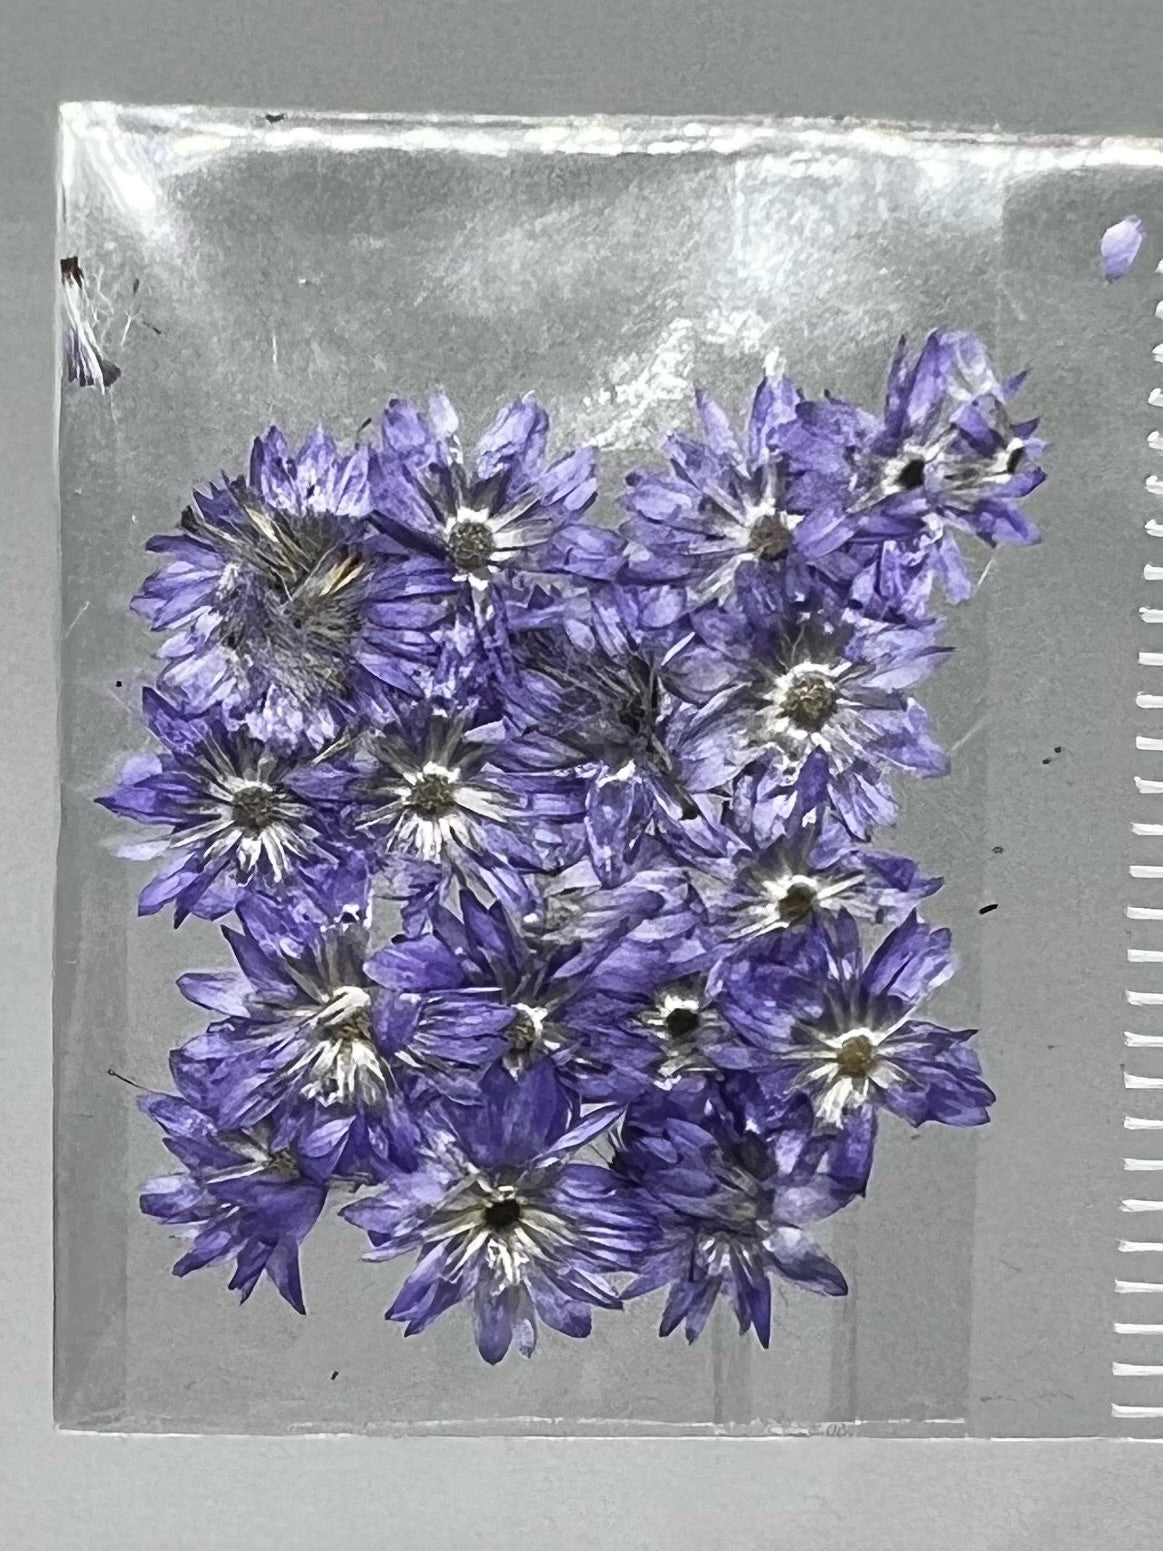 Dried Flowers - Daisy